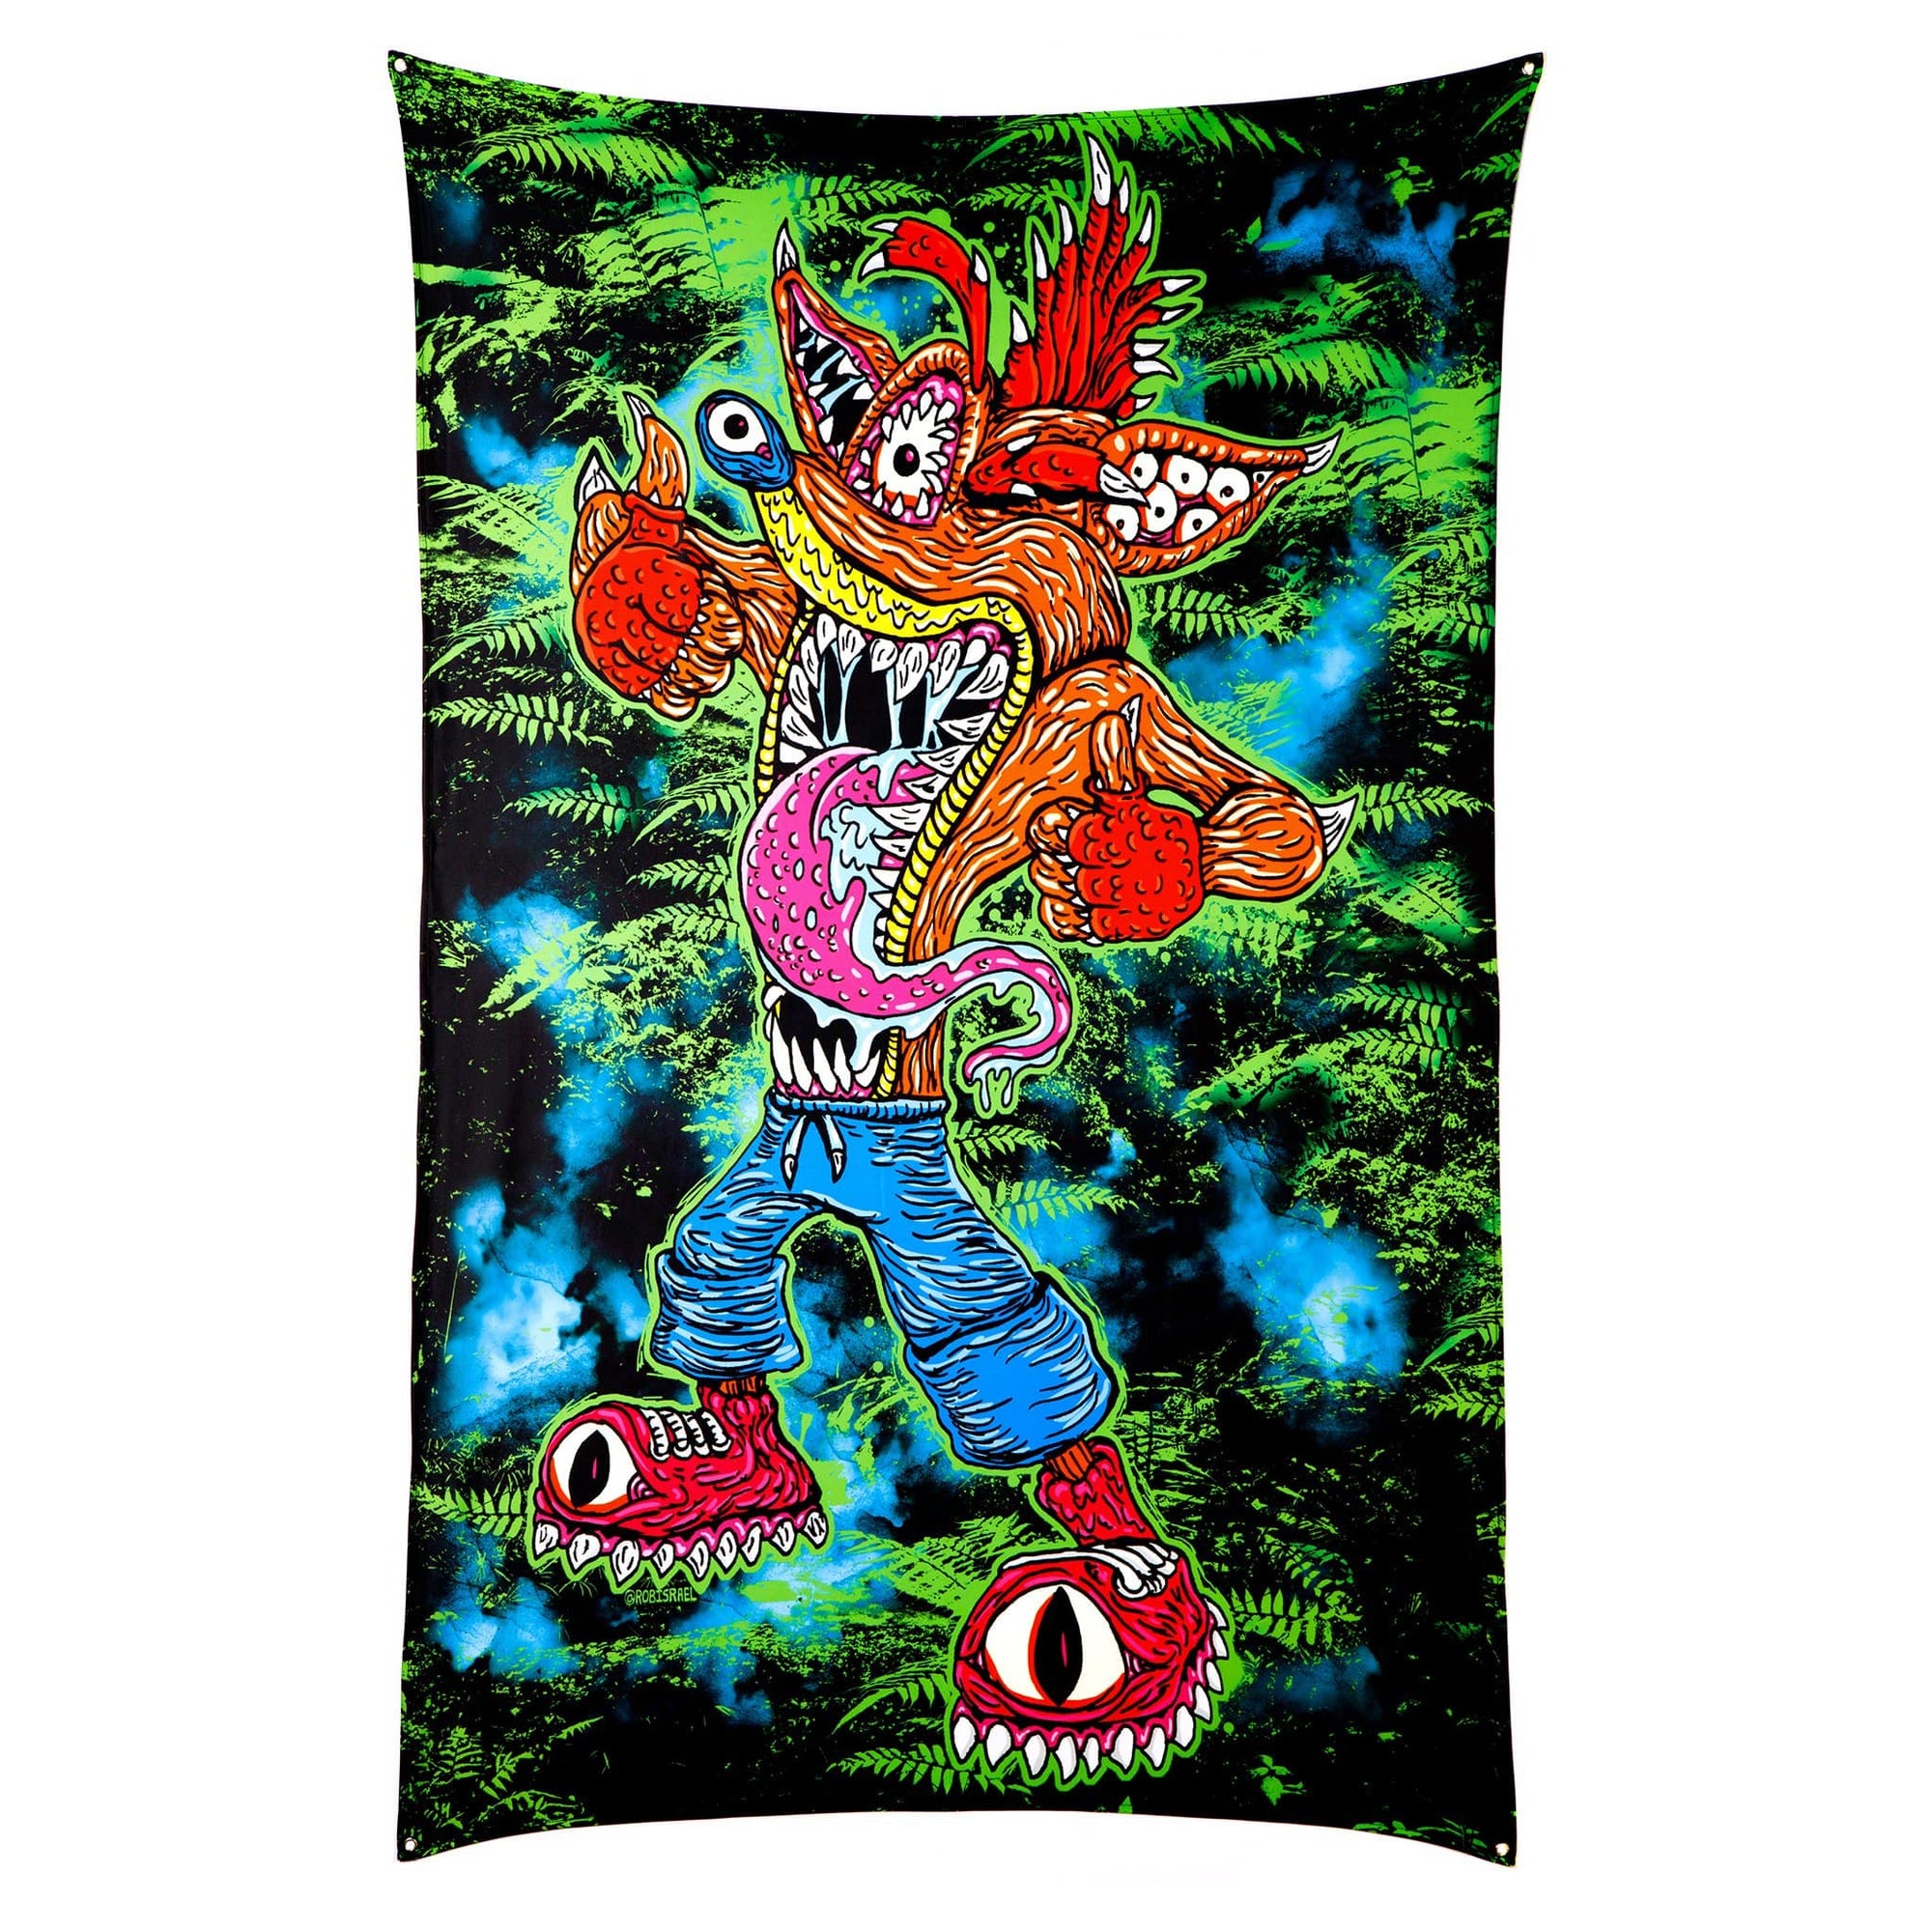 Monster Crash Bandicoot Tapestry